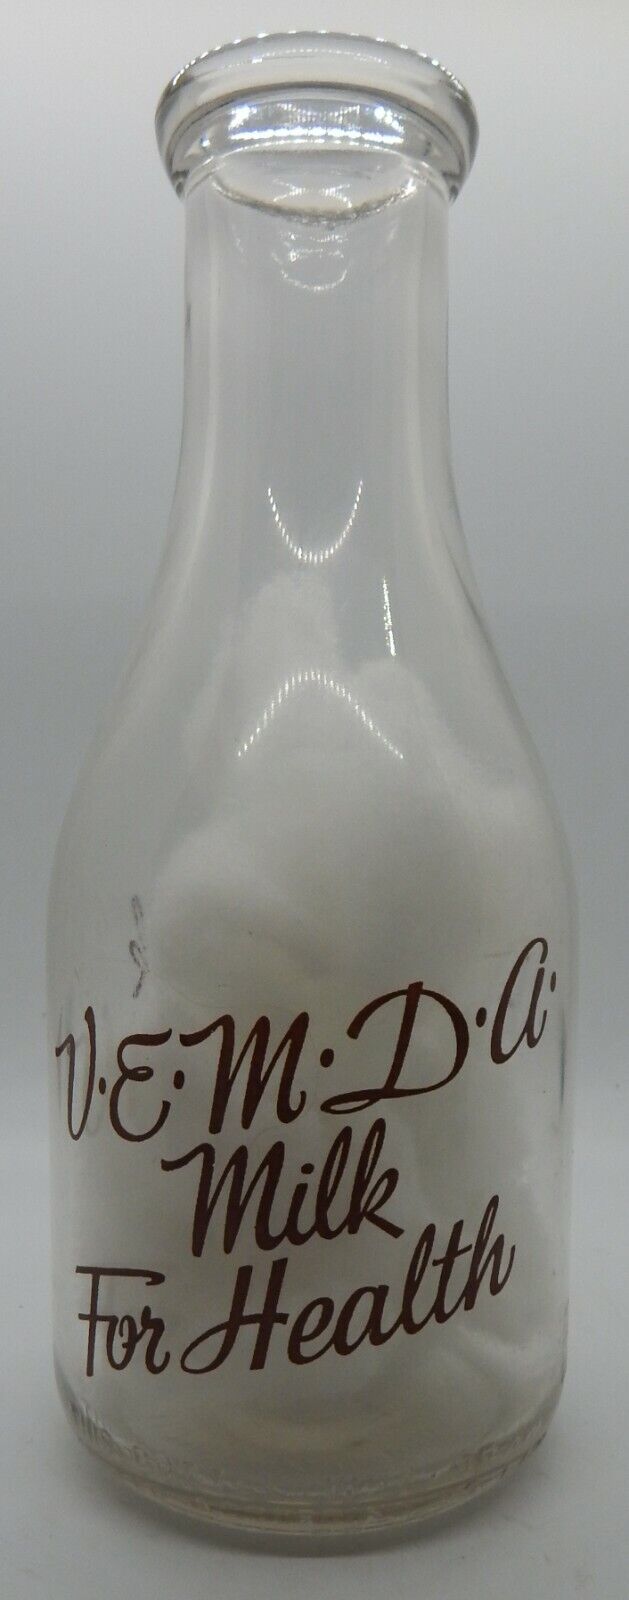 V. E. M. D. A. Round Pyroglazed Quart Milk Bottle - Deposit Bottle - Maverick